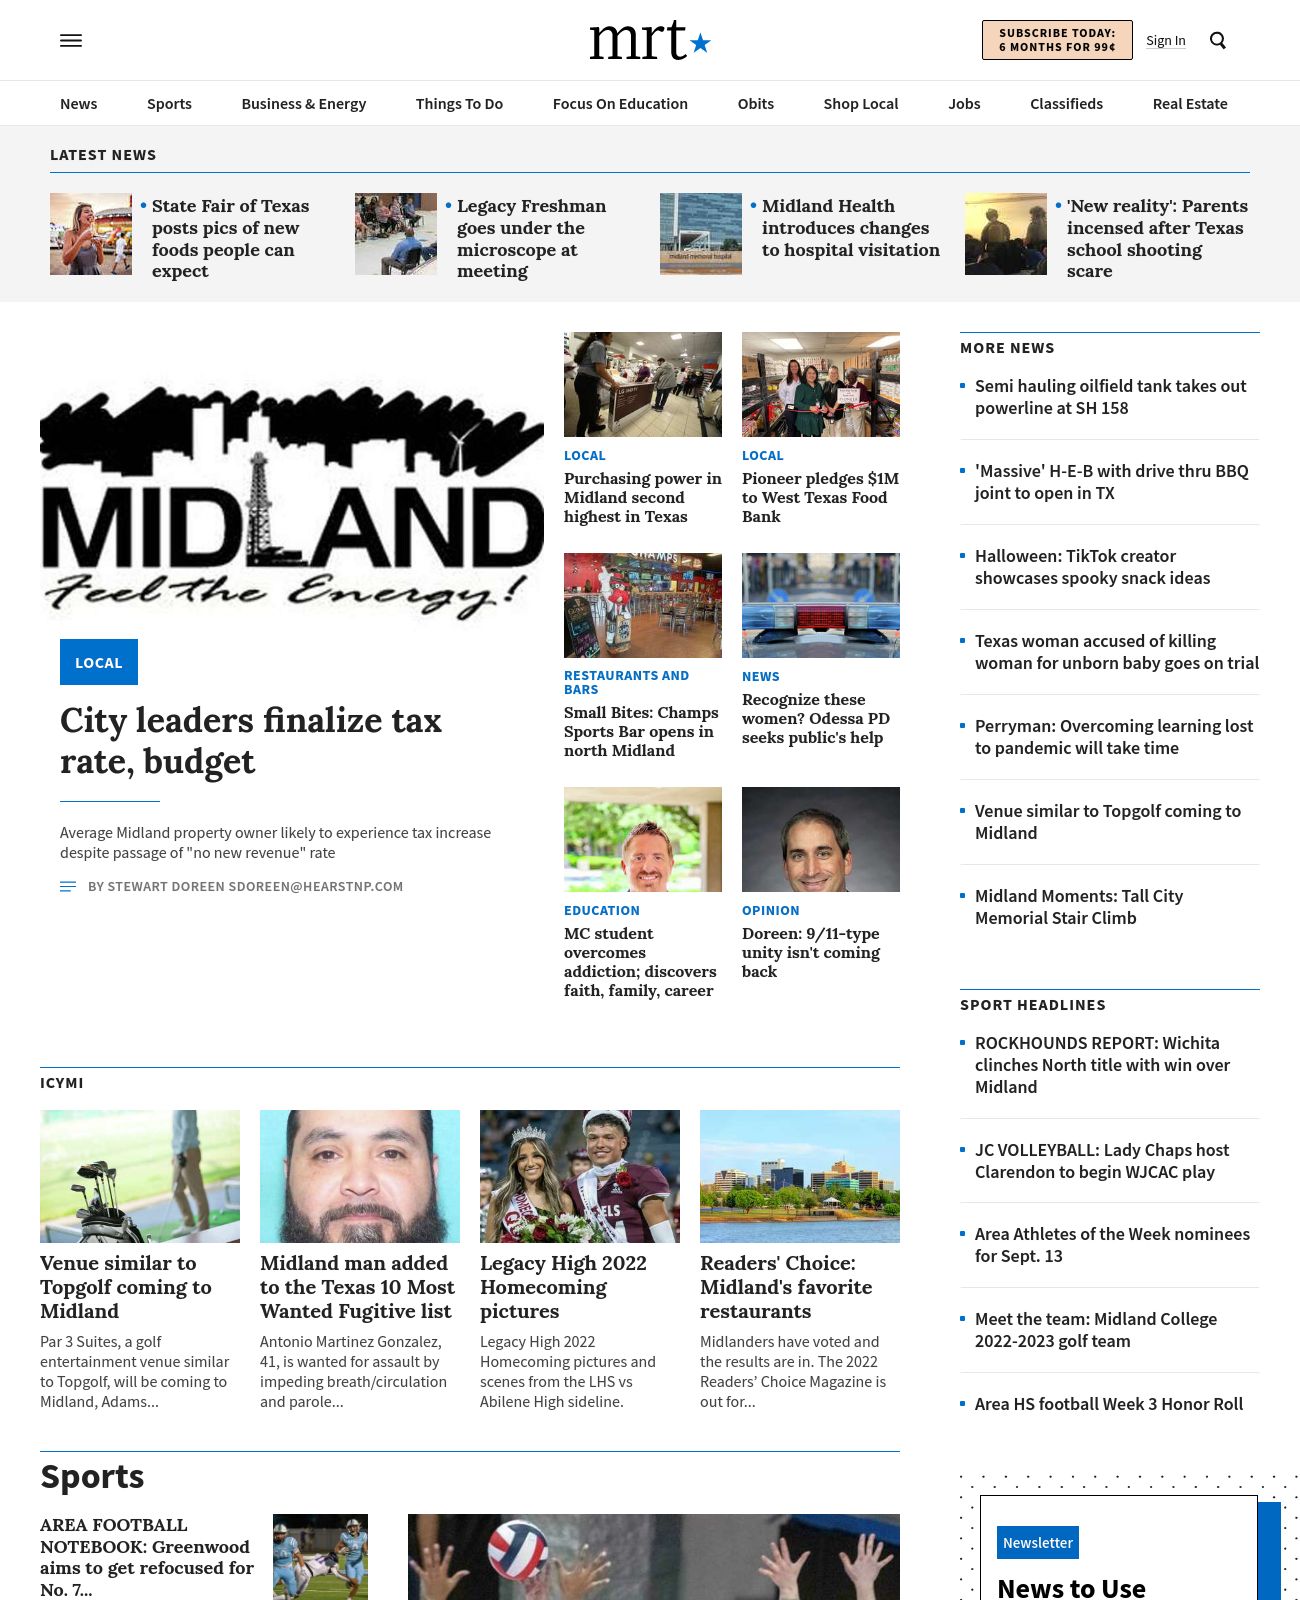 Midland Reporter-Telegram at 2022-09-14 11:27:39-05:00 local time